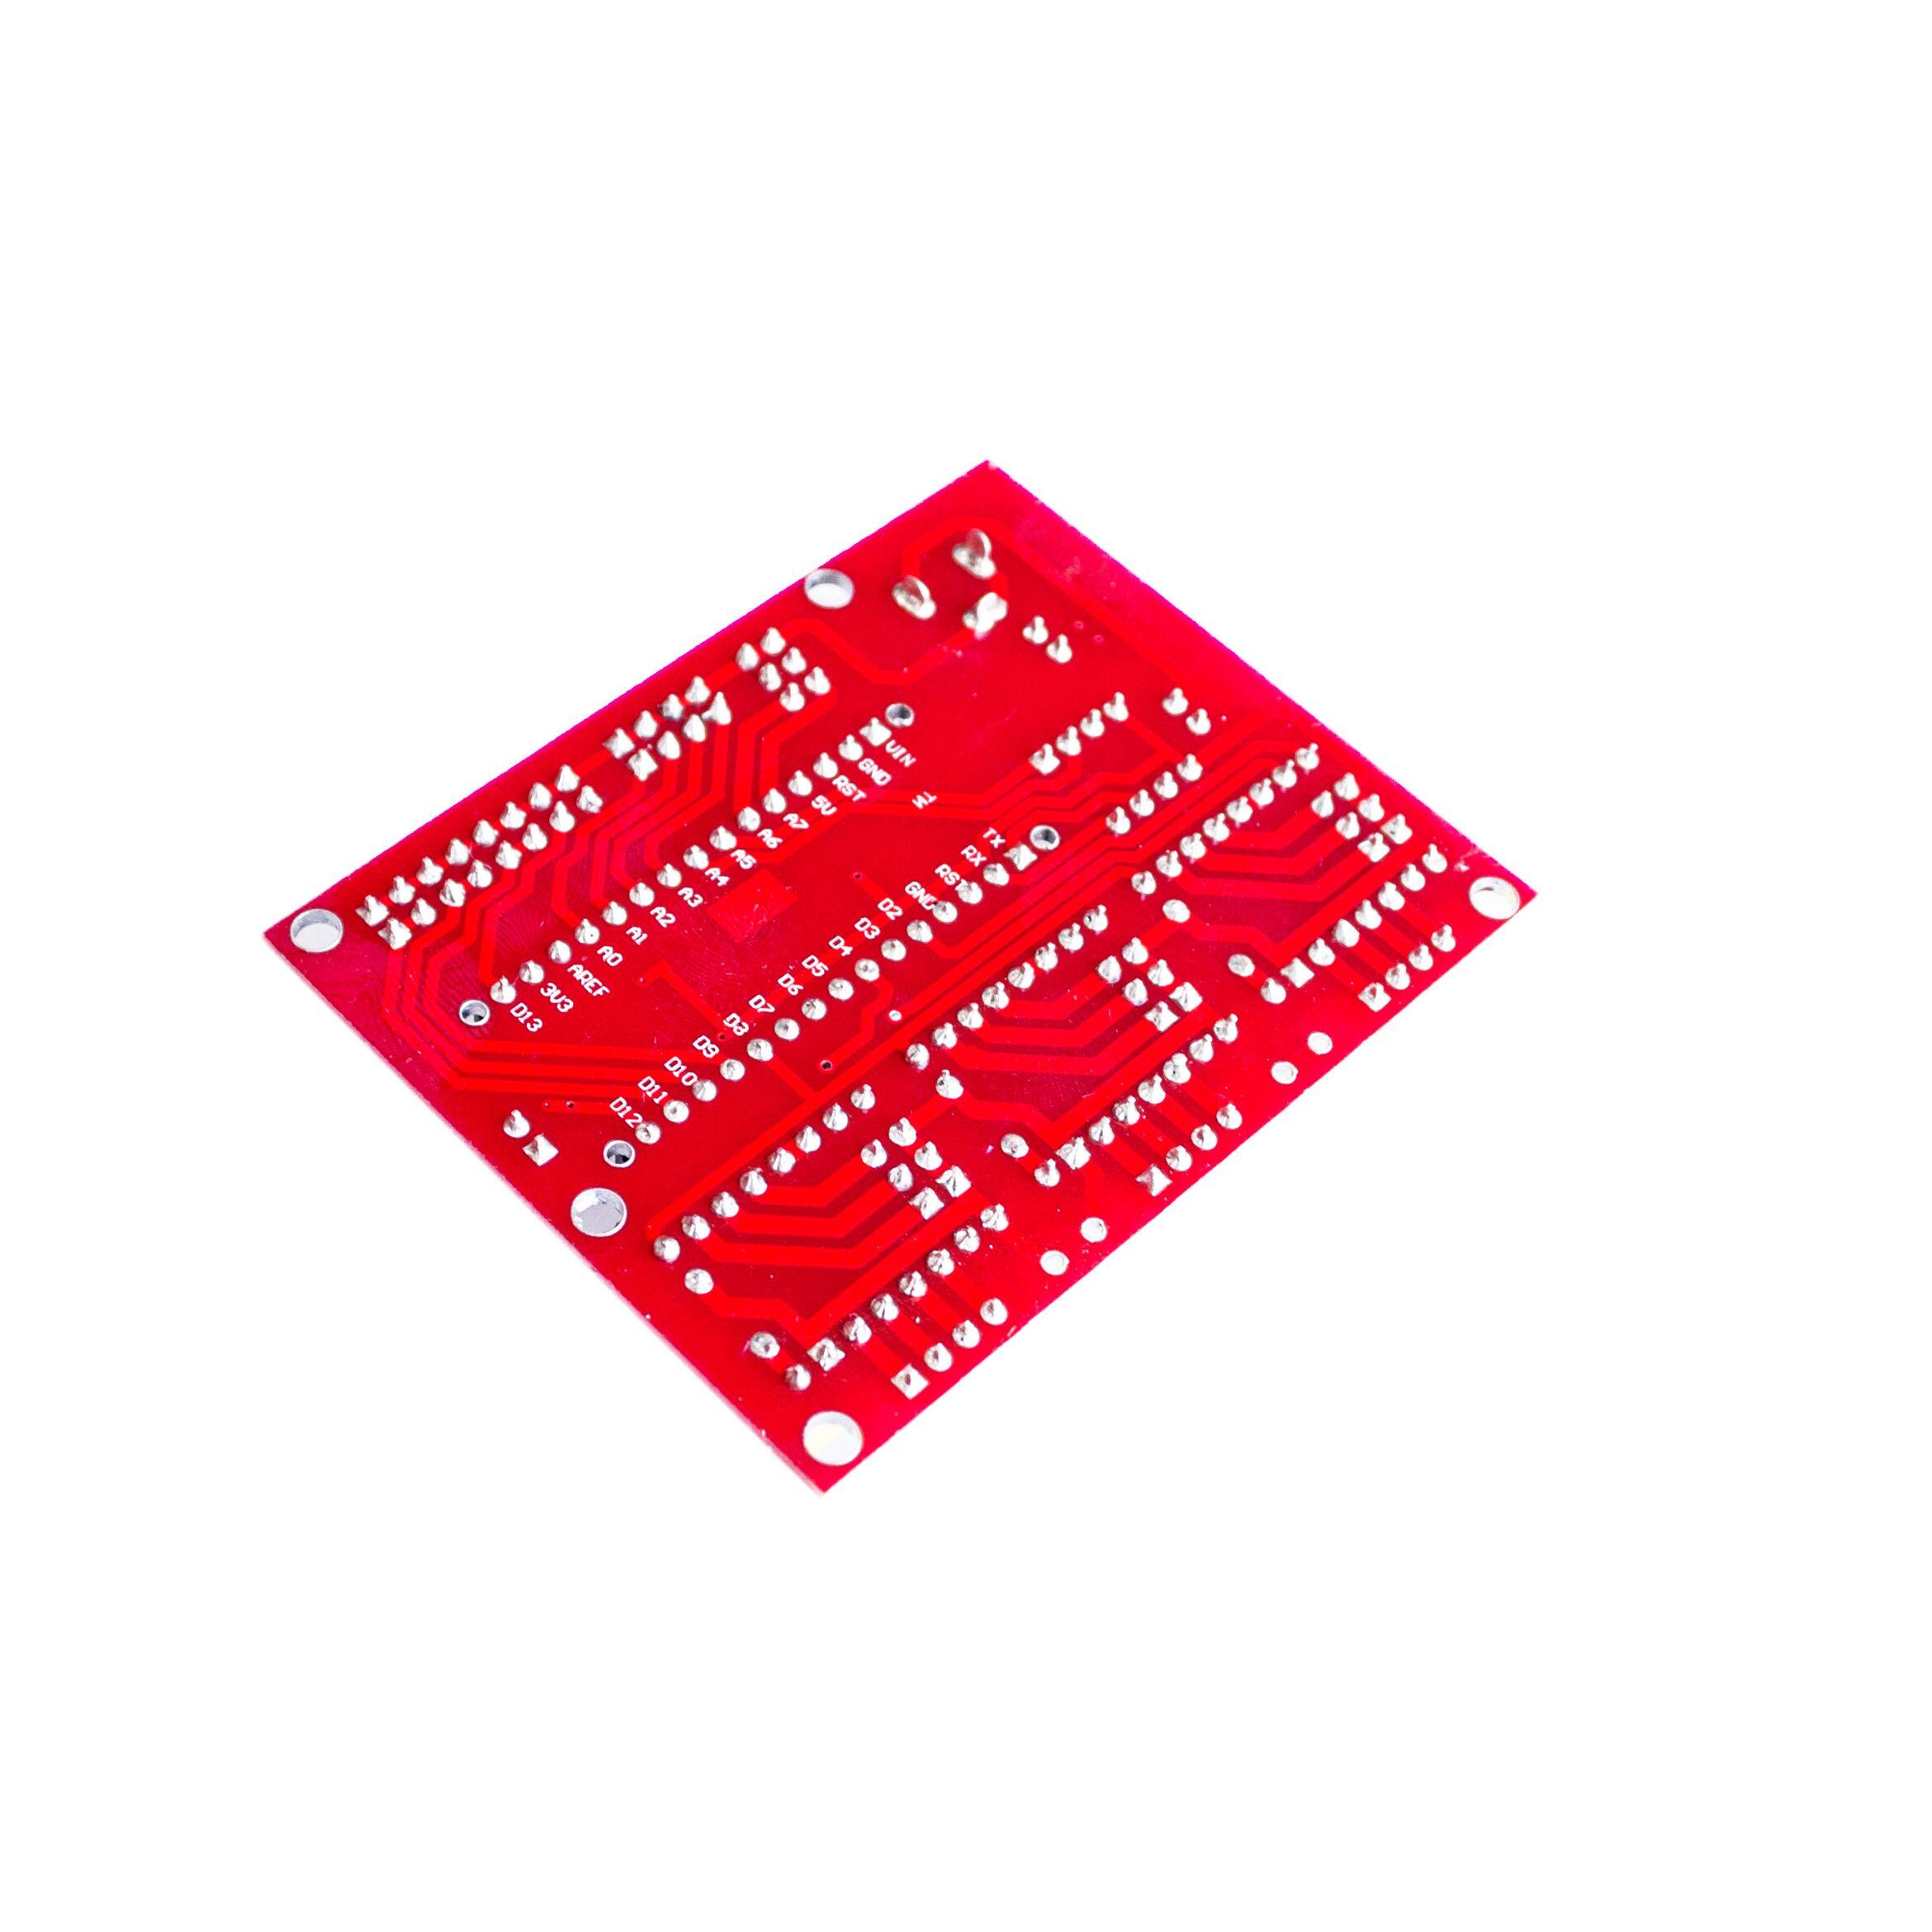 CNC-shield-V4-engraving-machine-3D-Printer-3pcs-A4988-driver-expansion-board-For-Arduino-NANO-V3-0-with-USB-cable-nano-3-0